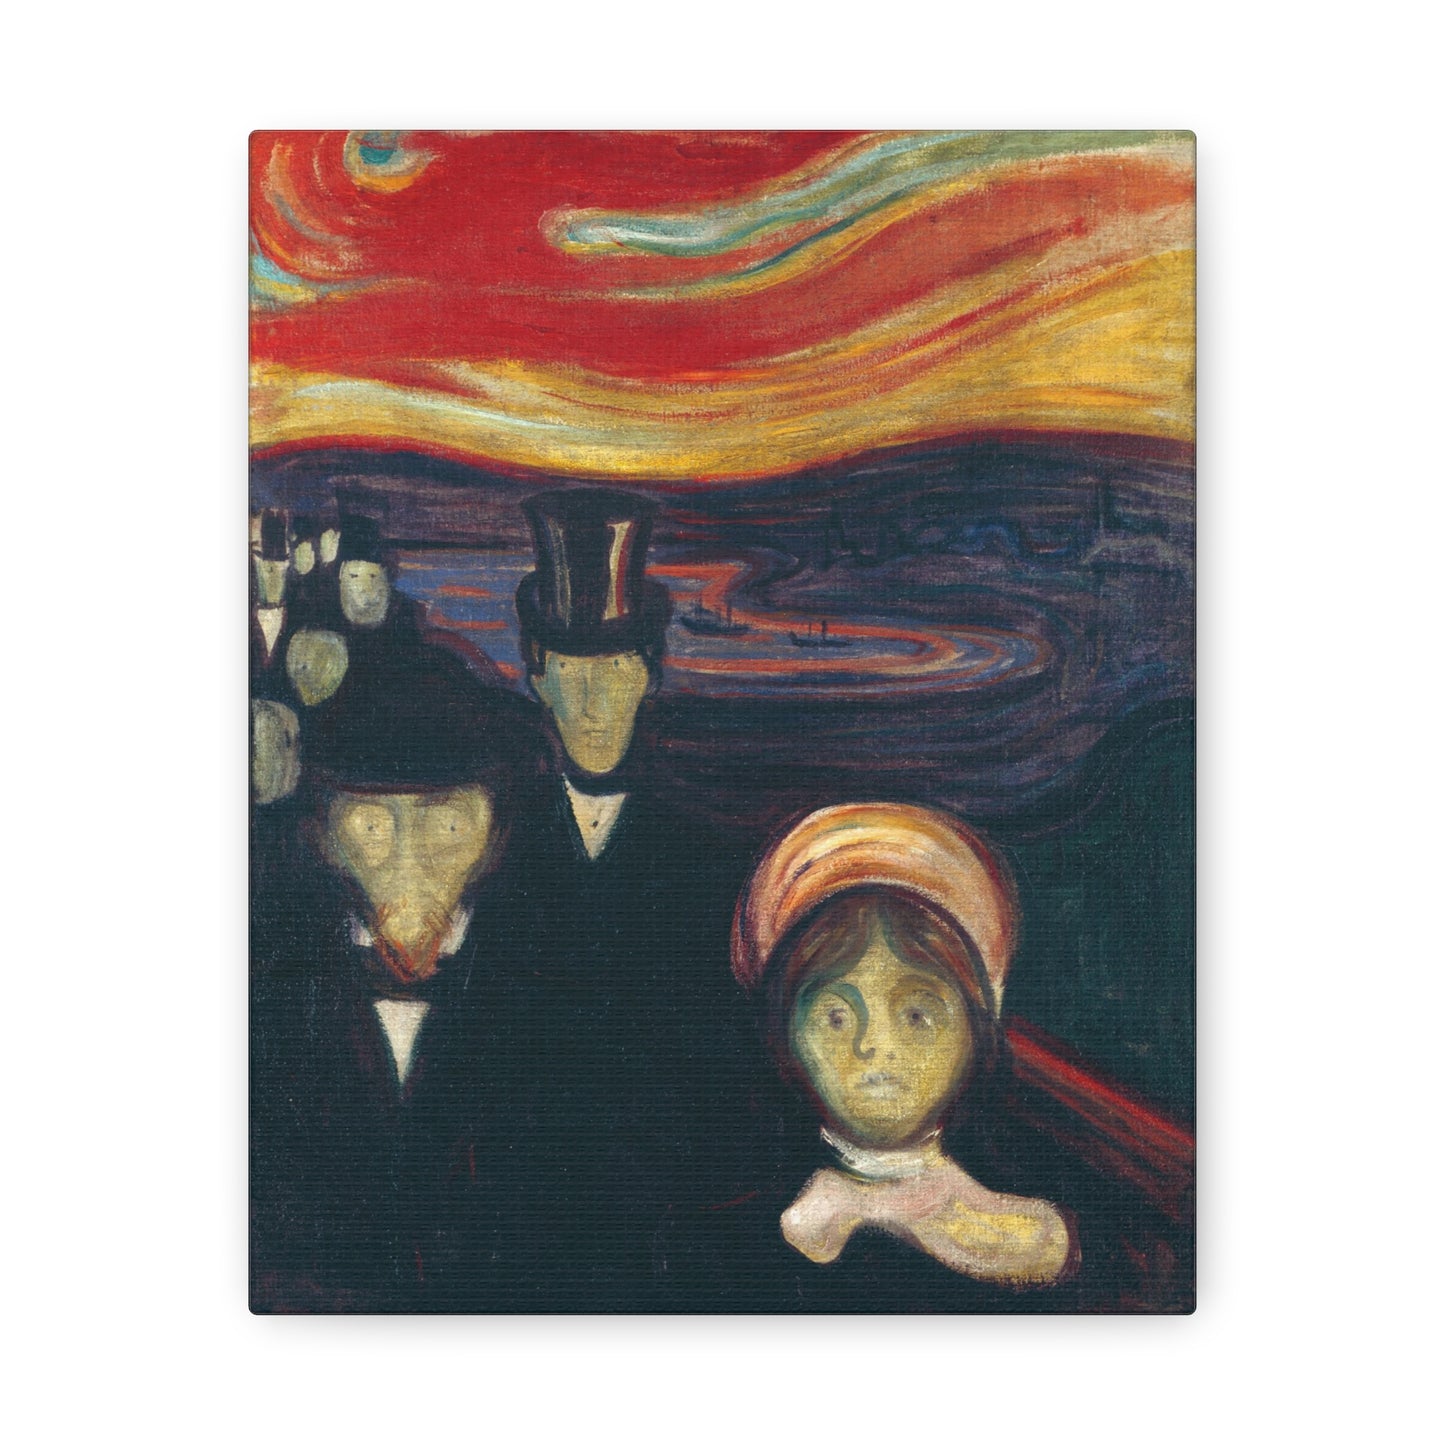 Anxiety - By Edvard Munch